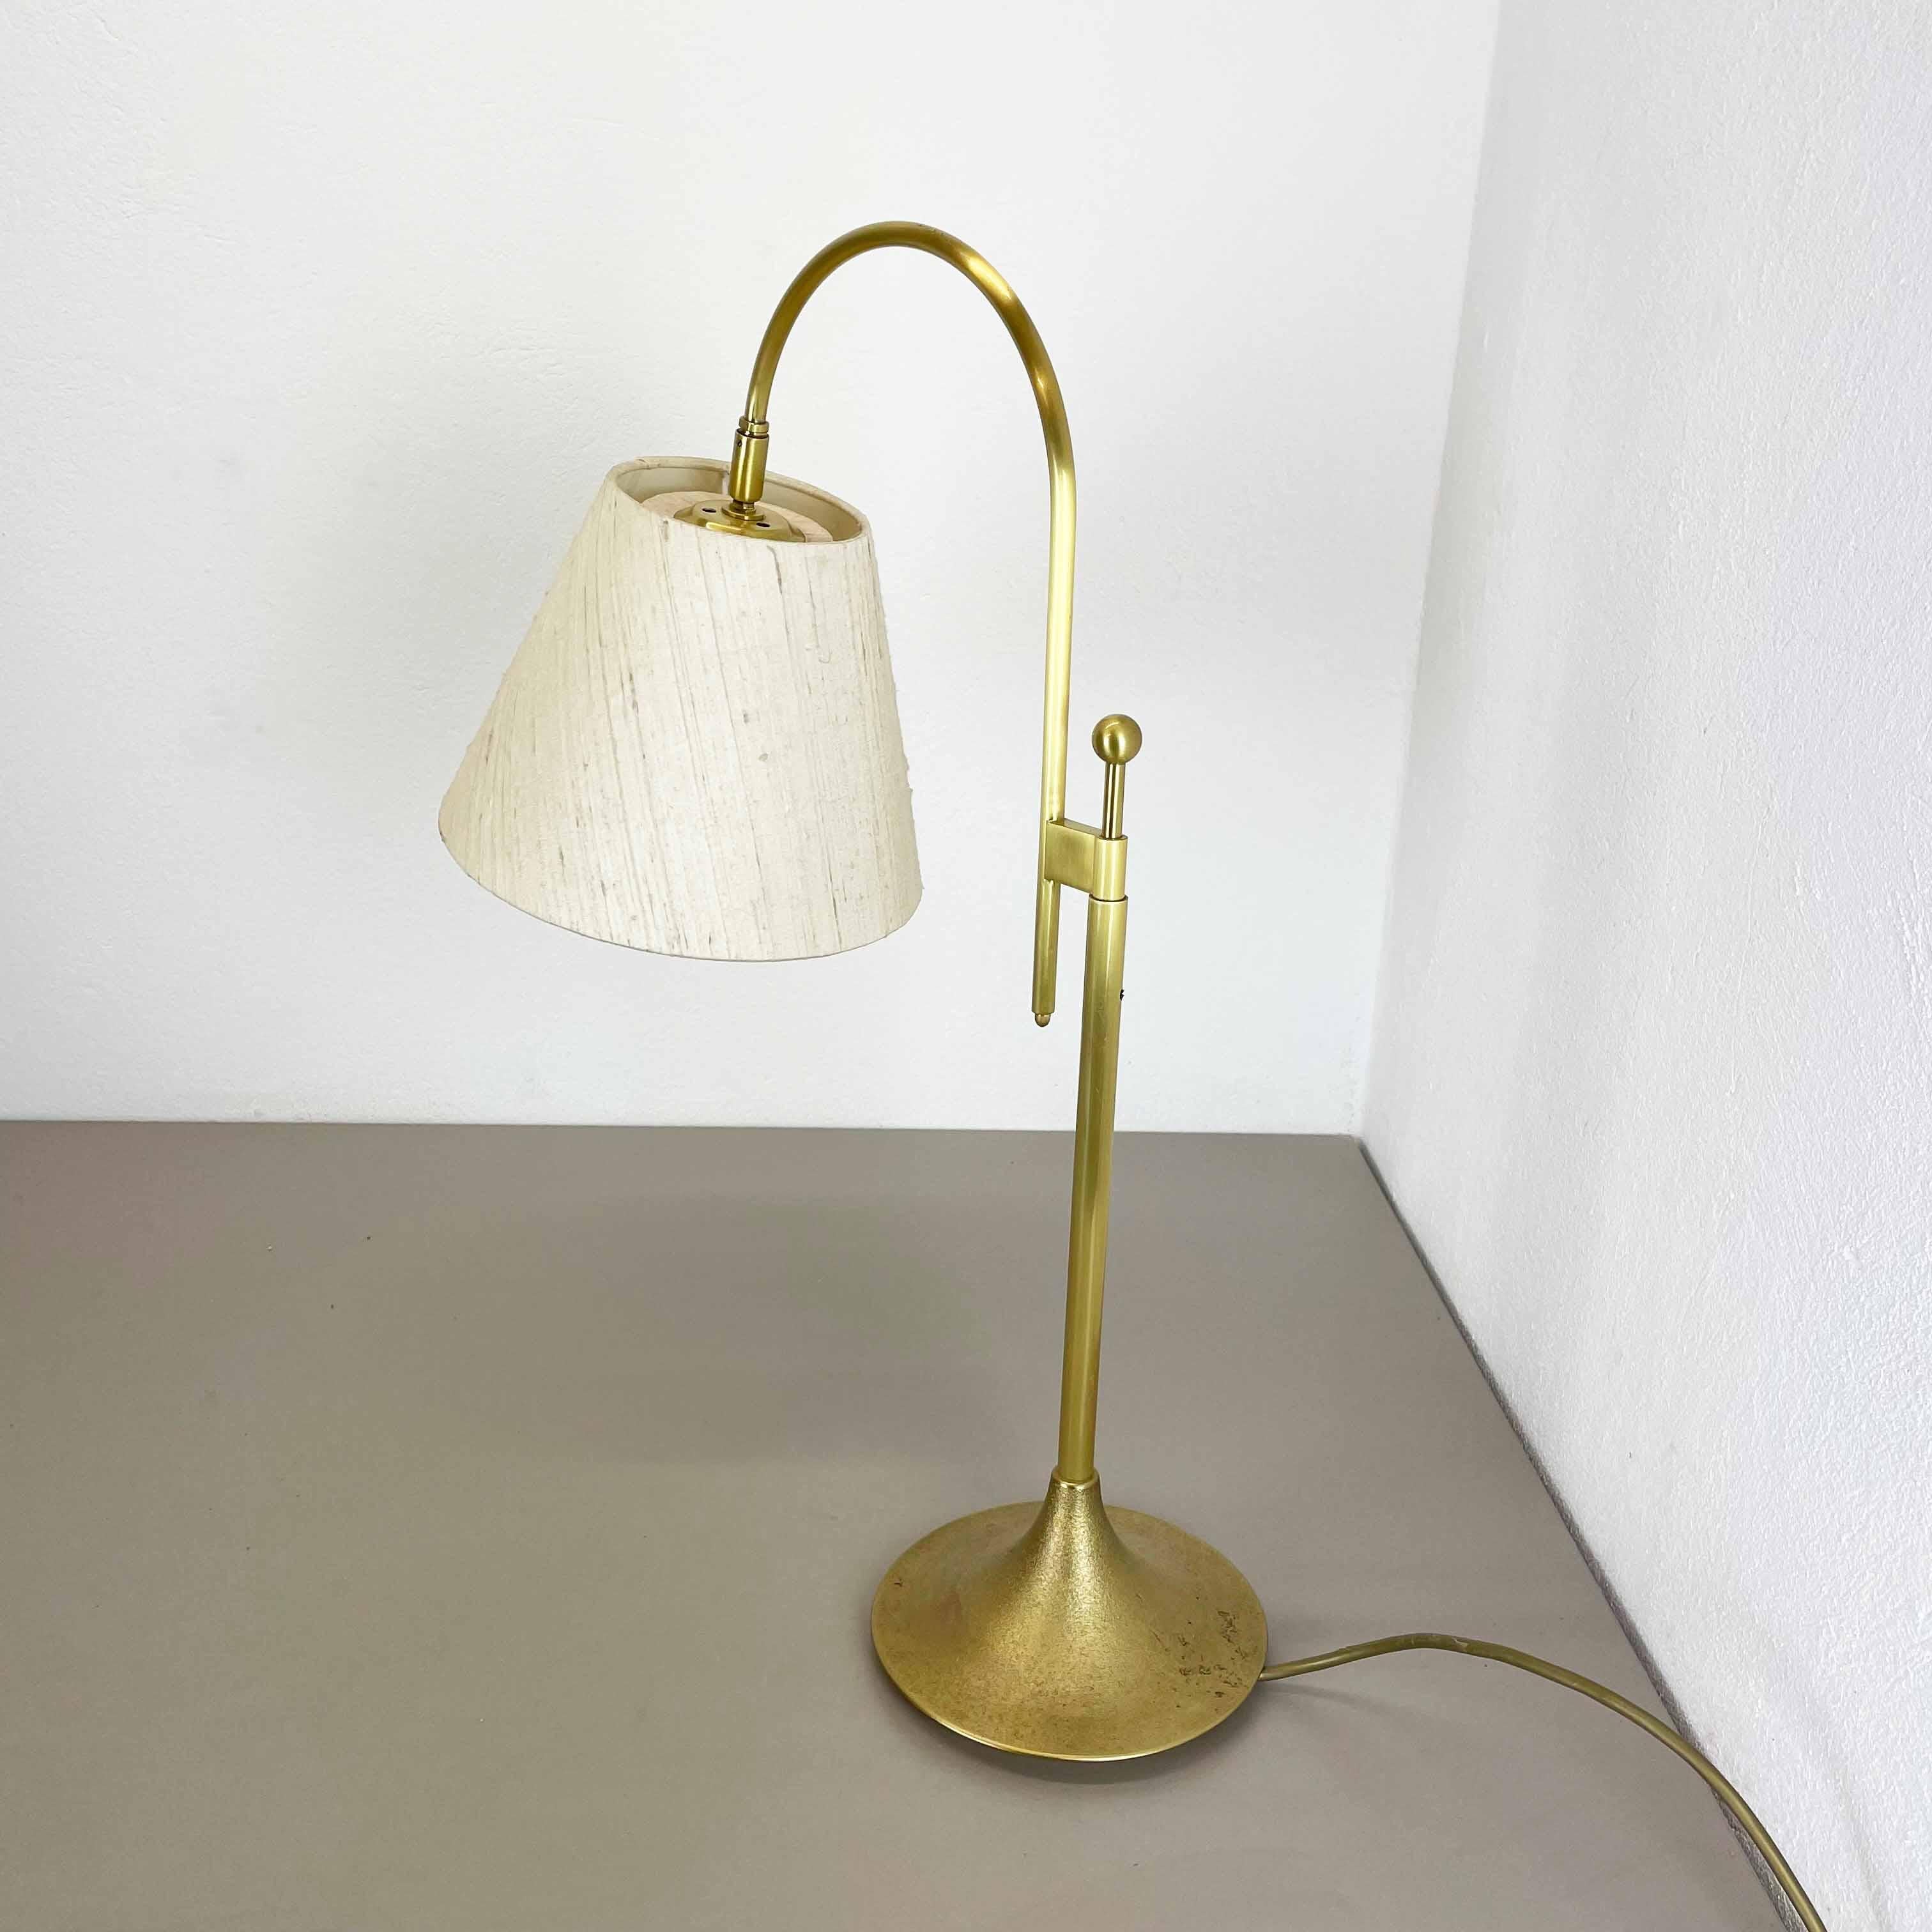 Italian Original Hollywood Regency Stilnovo Style Brass Sputnik Table Light, Italy 1970s For Sale